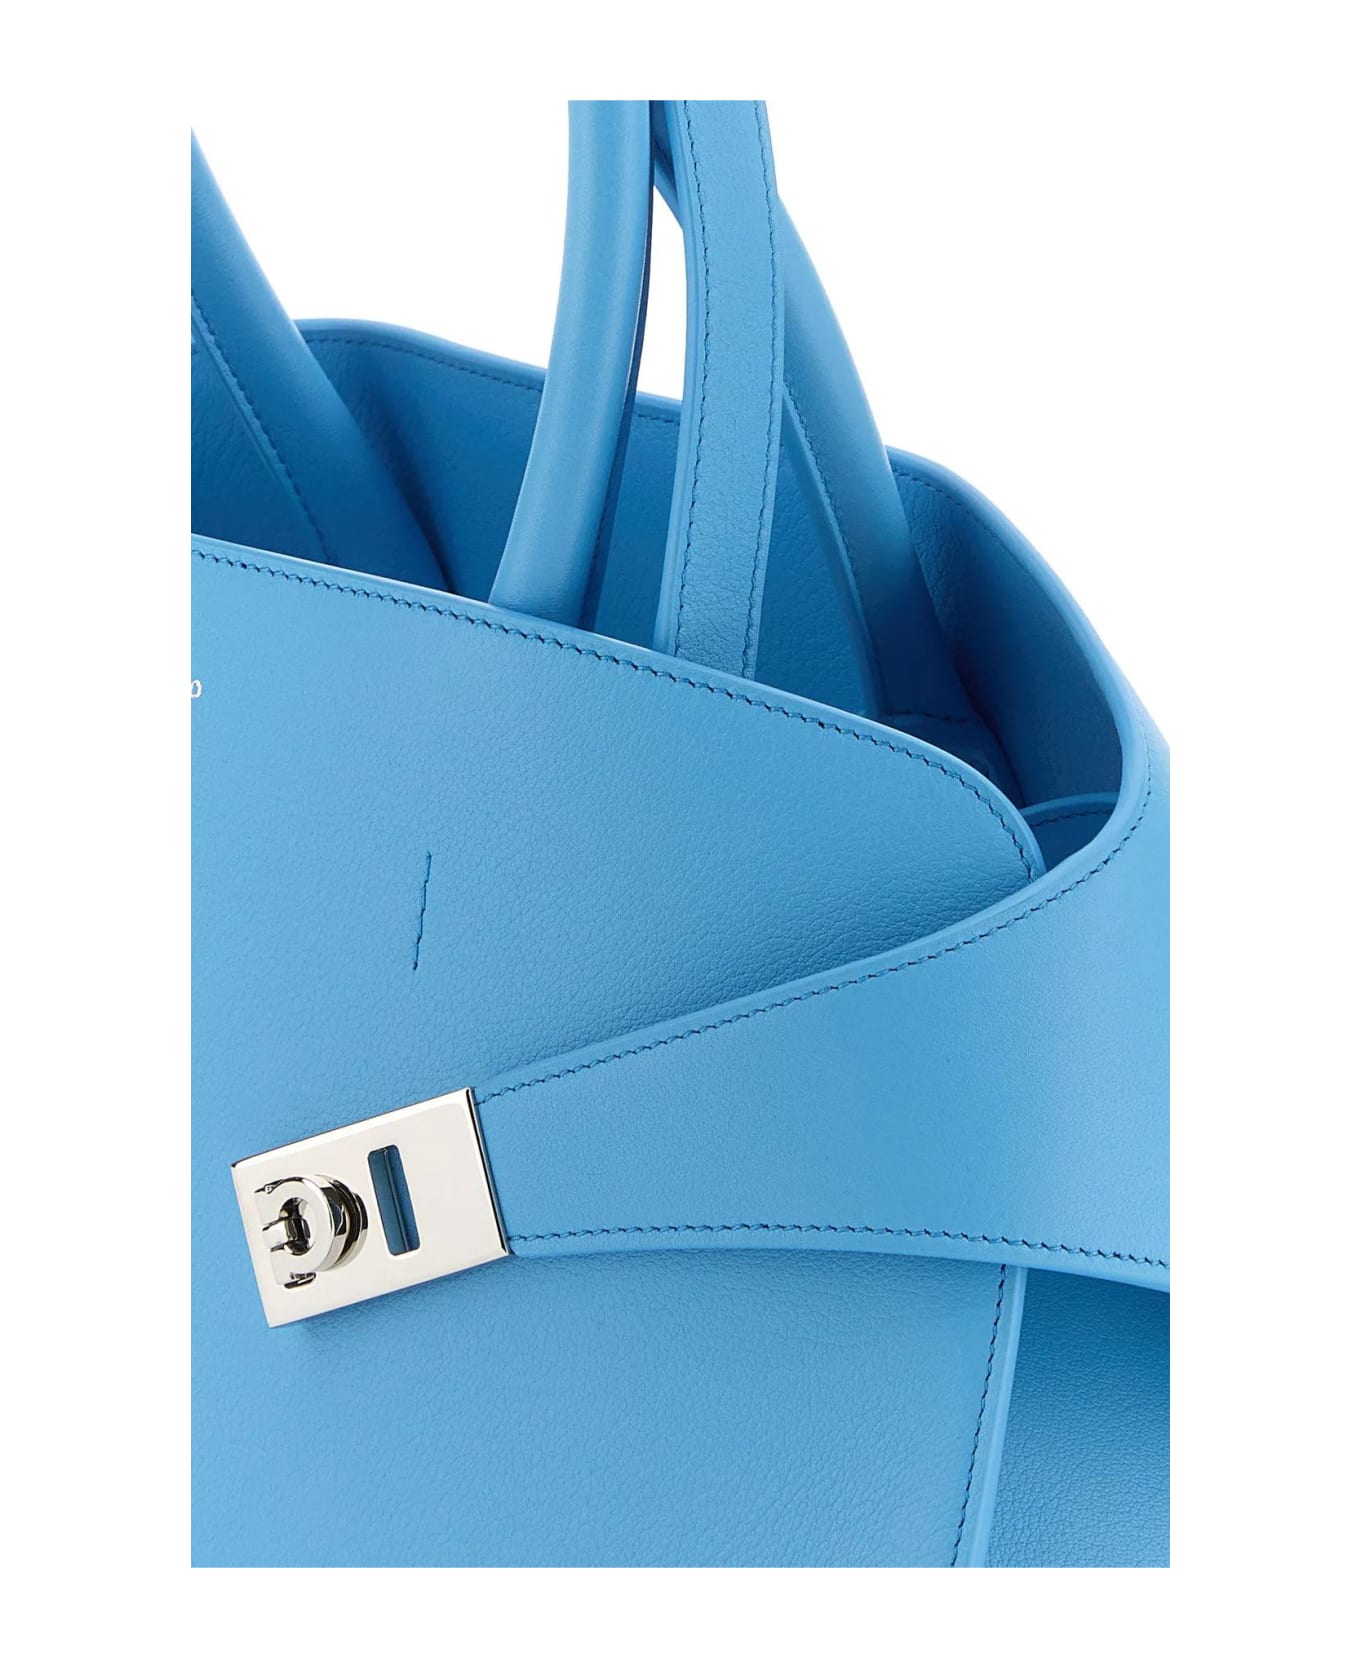 Ferragamo Turquoise Leather Small Hug Handbag - Gnawed Blue